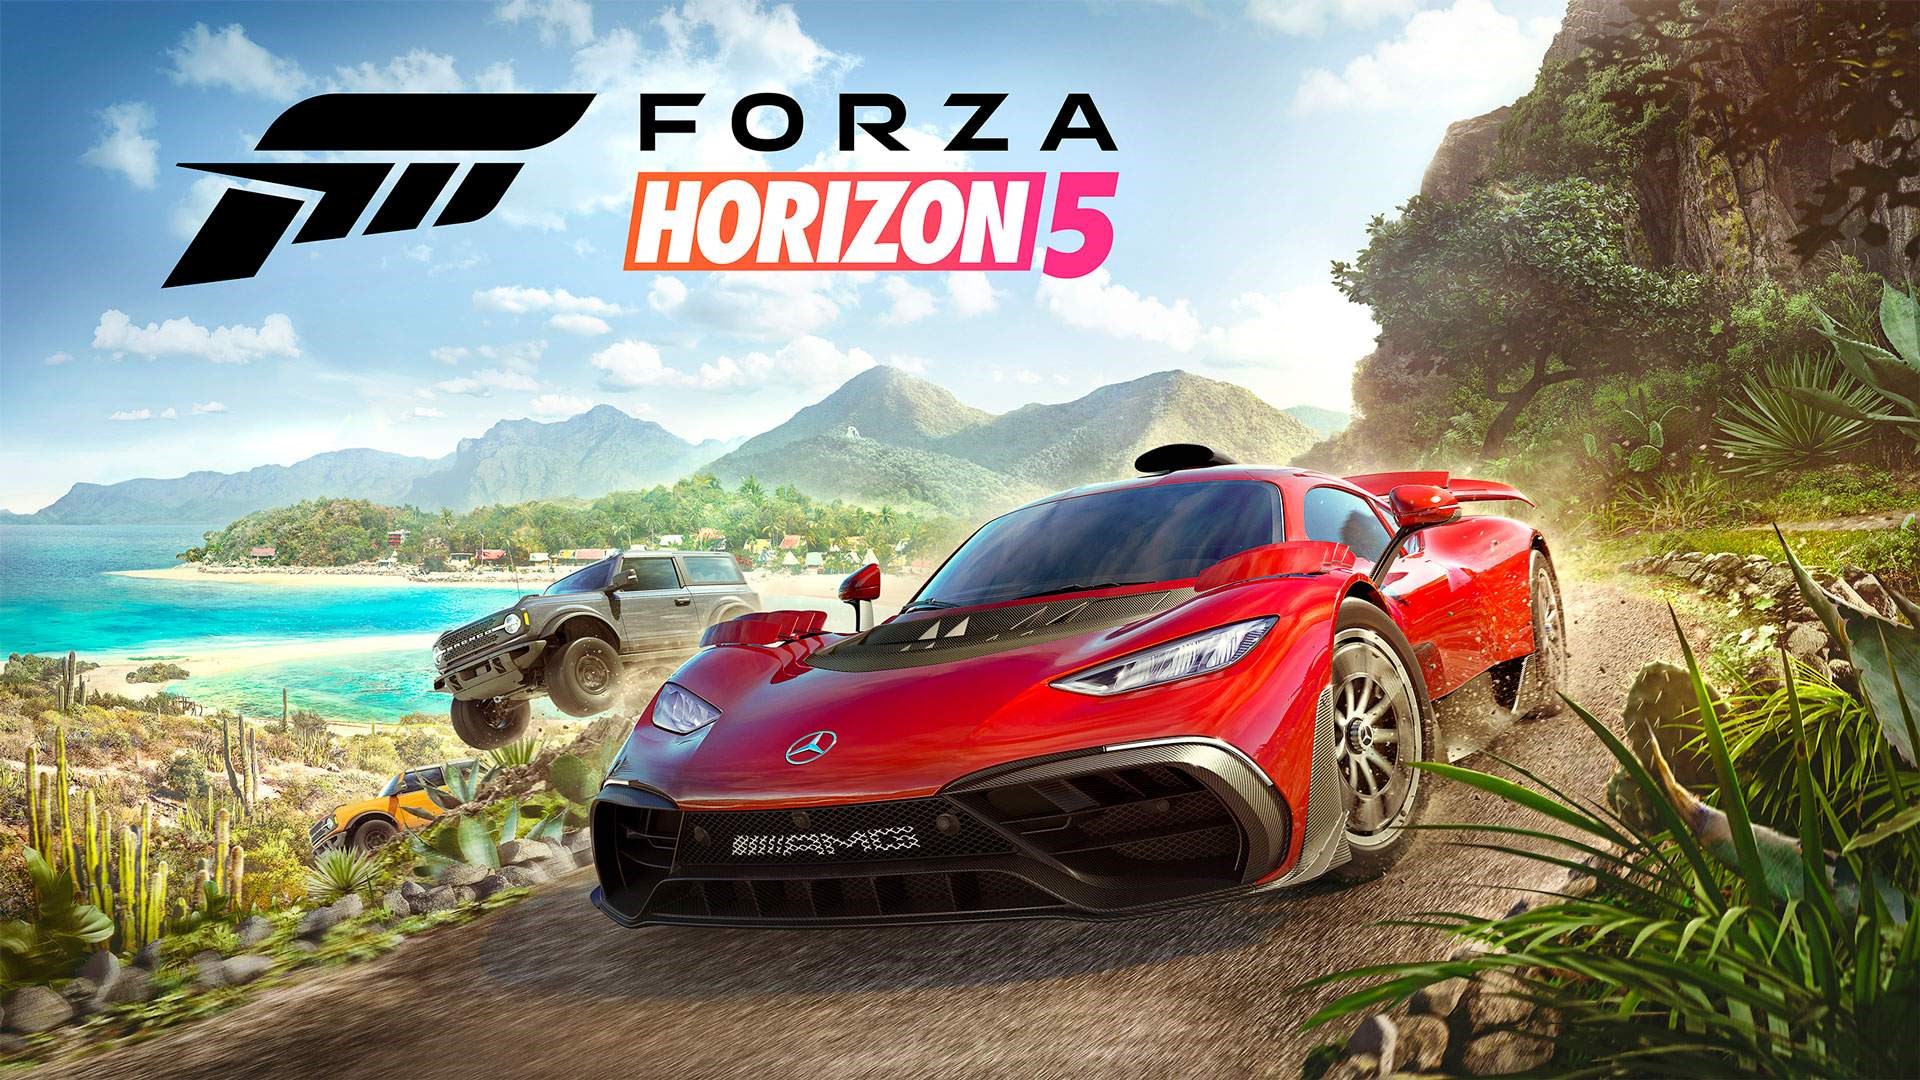 Forza Horizon 5 temalı Xbox kontrolcüsü duyuruldu